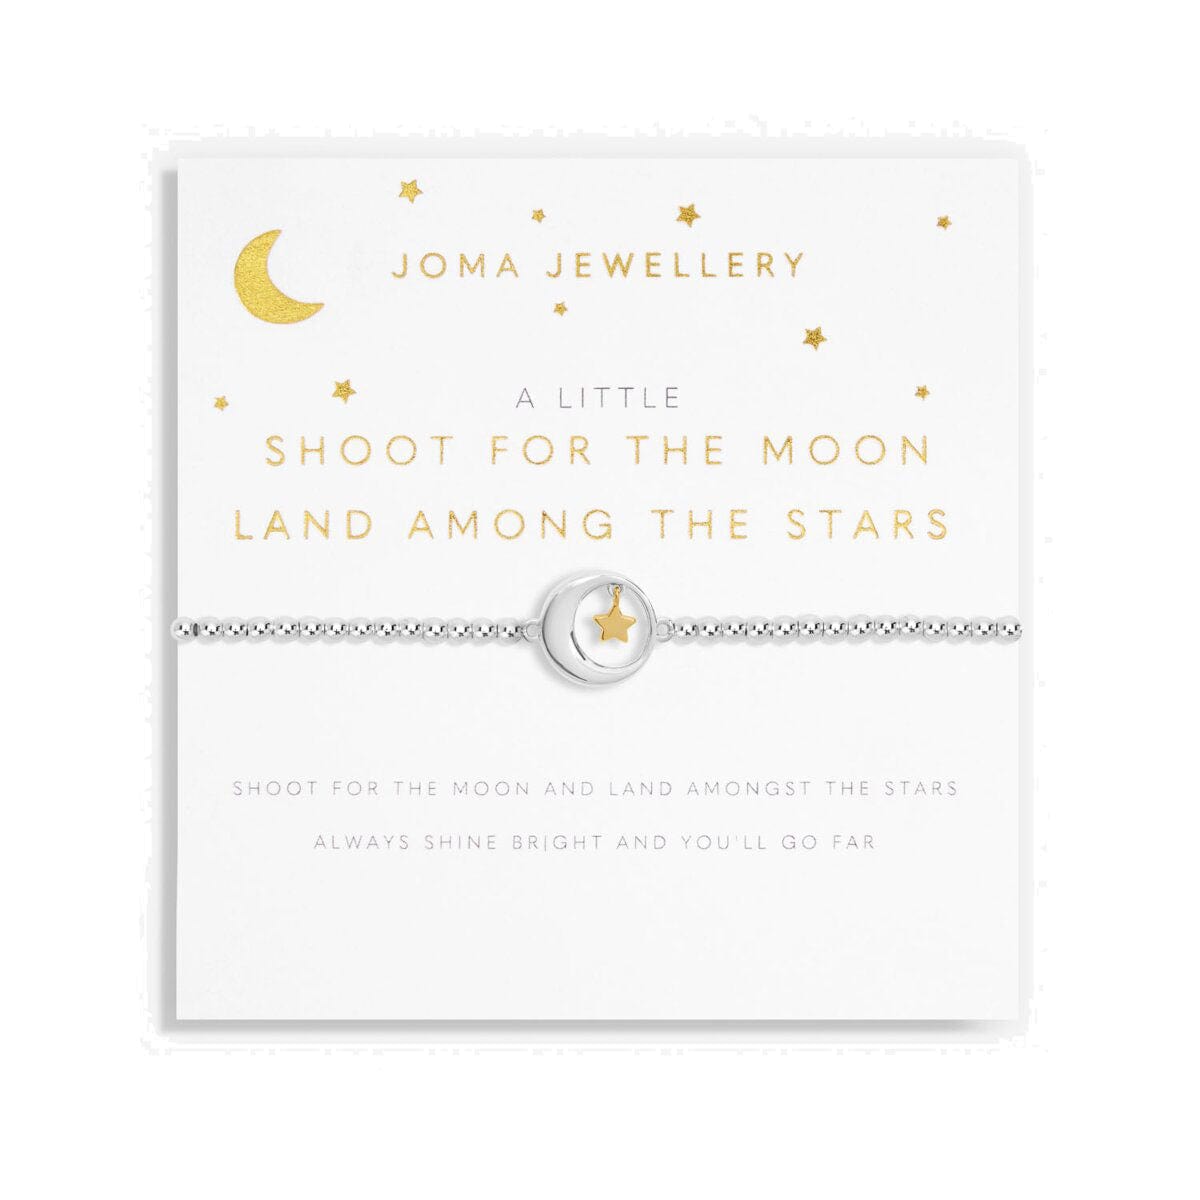 Joma Jewellery Childrens Bracelet Joma Jewellery Children's Bracelet - A Little Shoot For The Moon